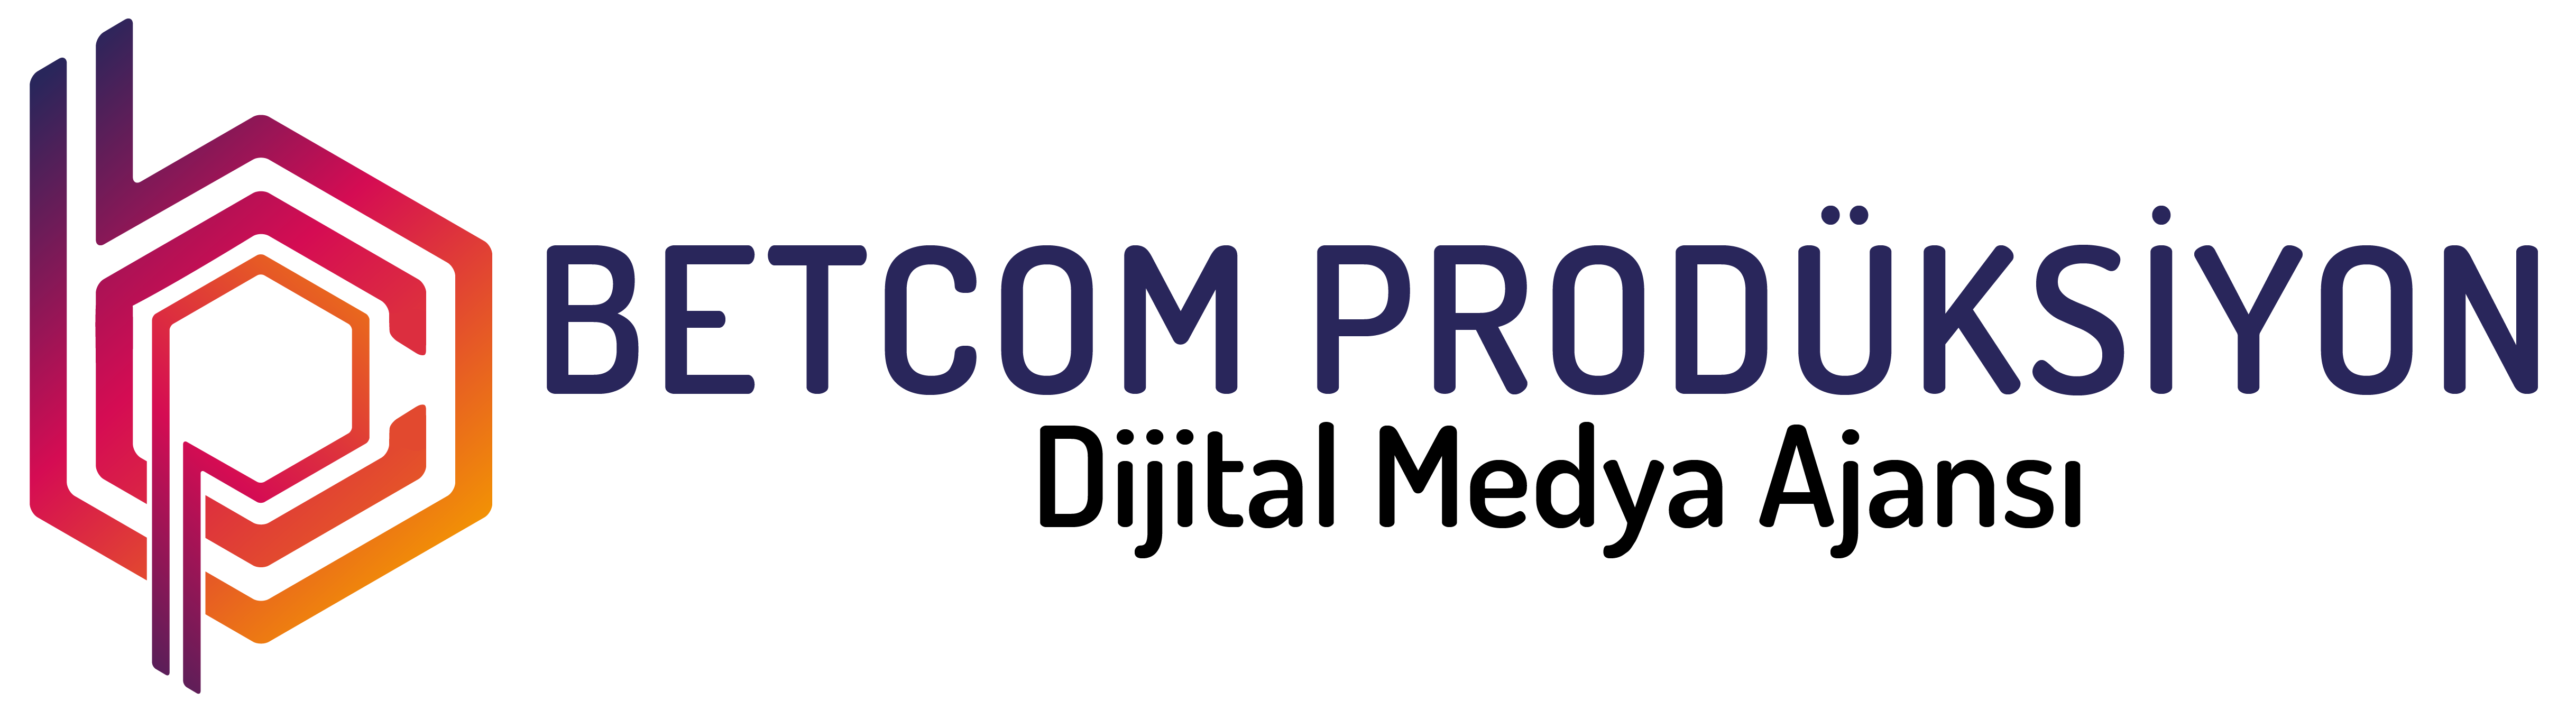 Betcom-Produksiyon_Logo